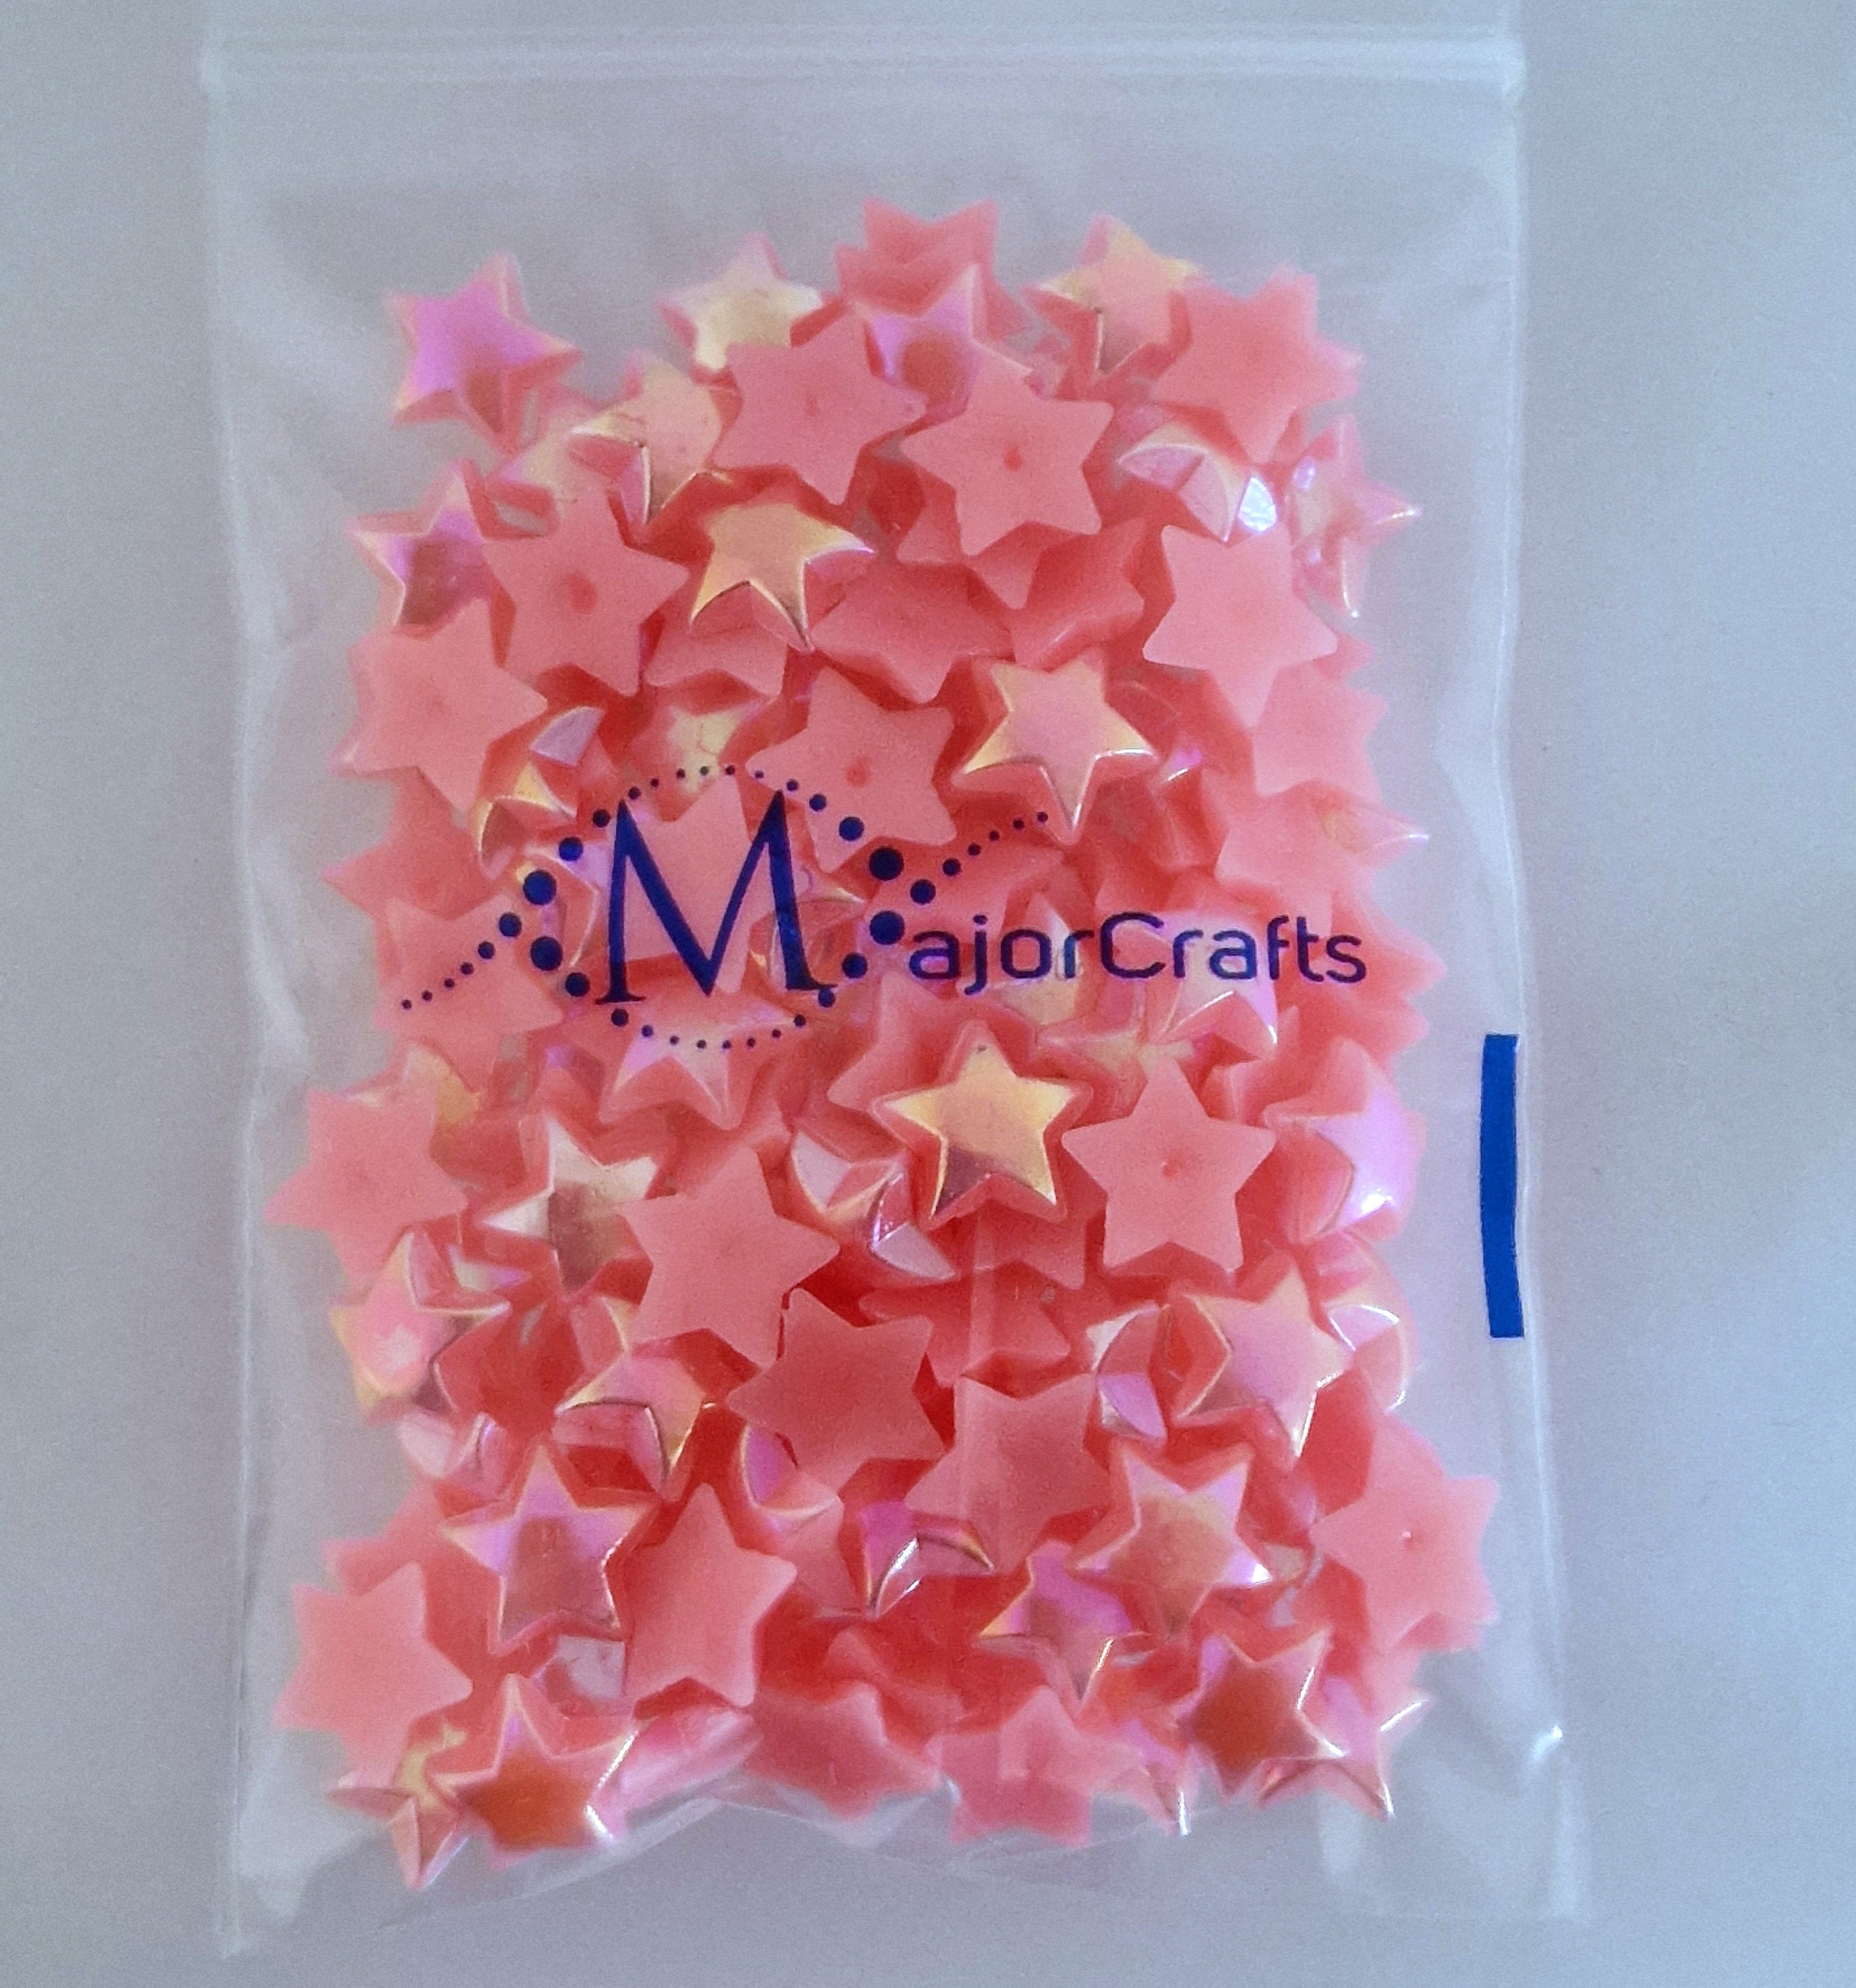 MajorCrafts 160pcs 10mm Light Pink AB Flat Back Star Resin Pearls